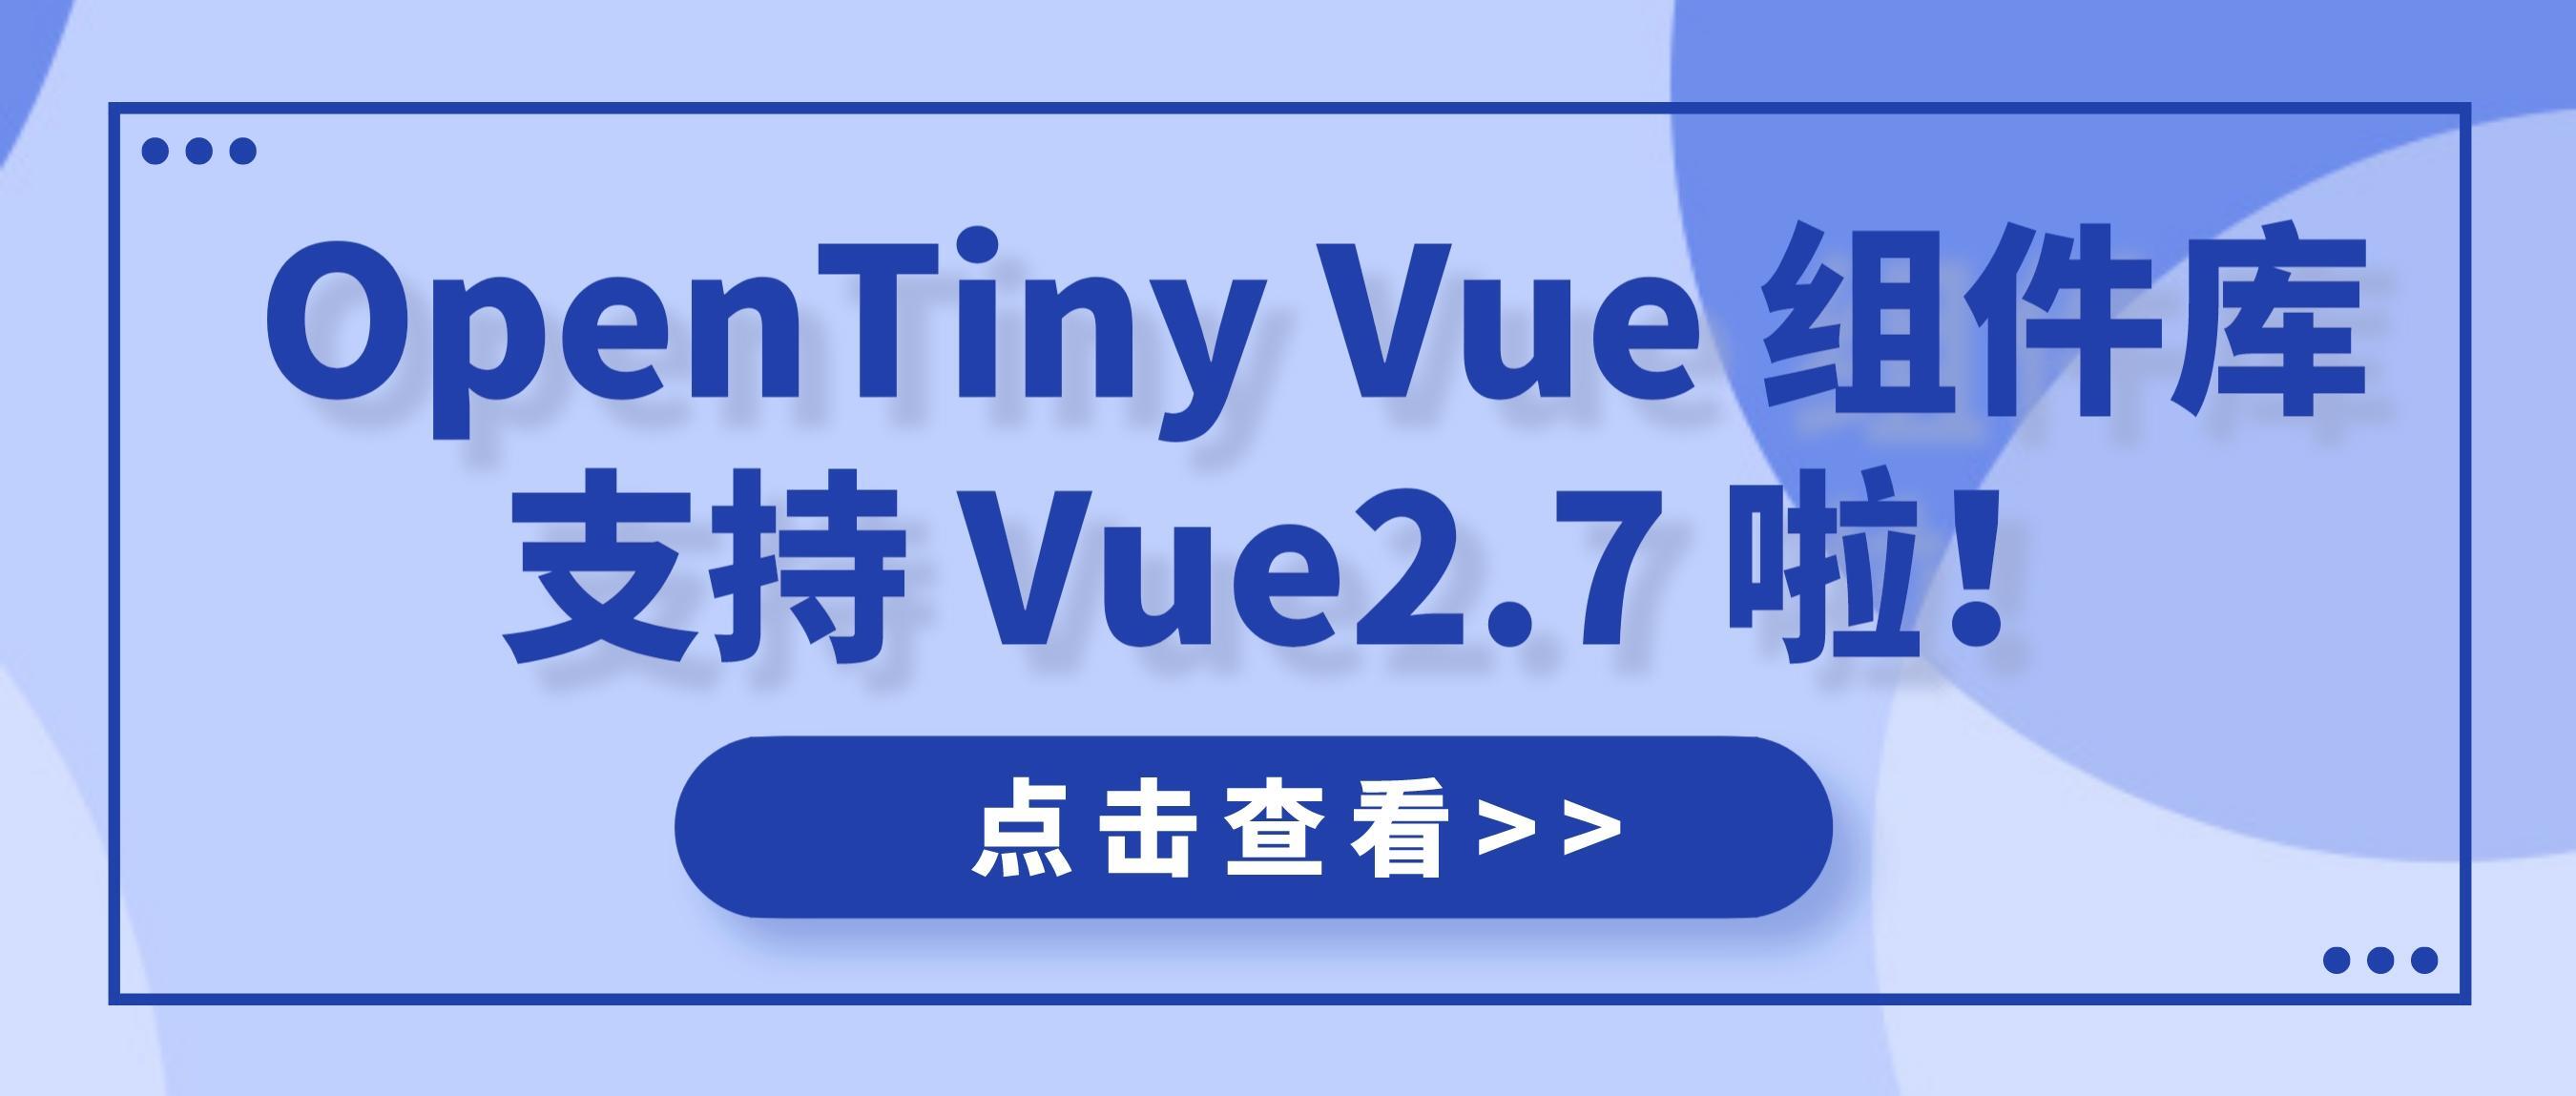 OpenTiny Vue 组件库支持 Vue2.7 啦！